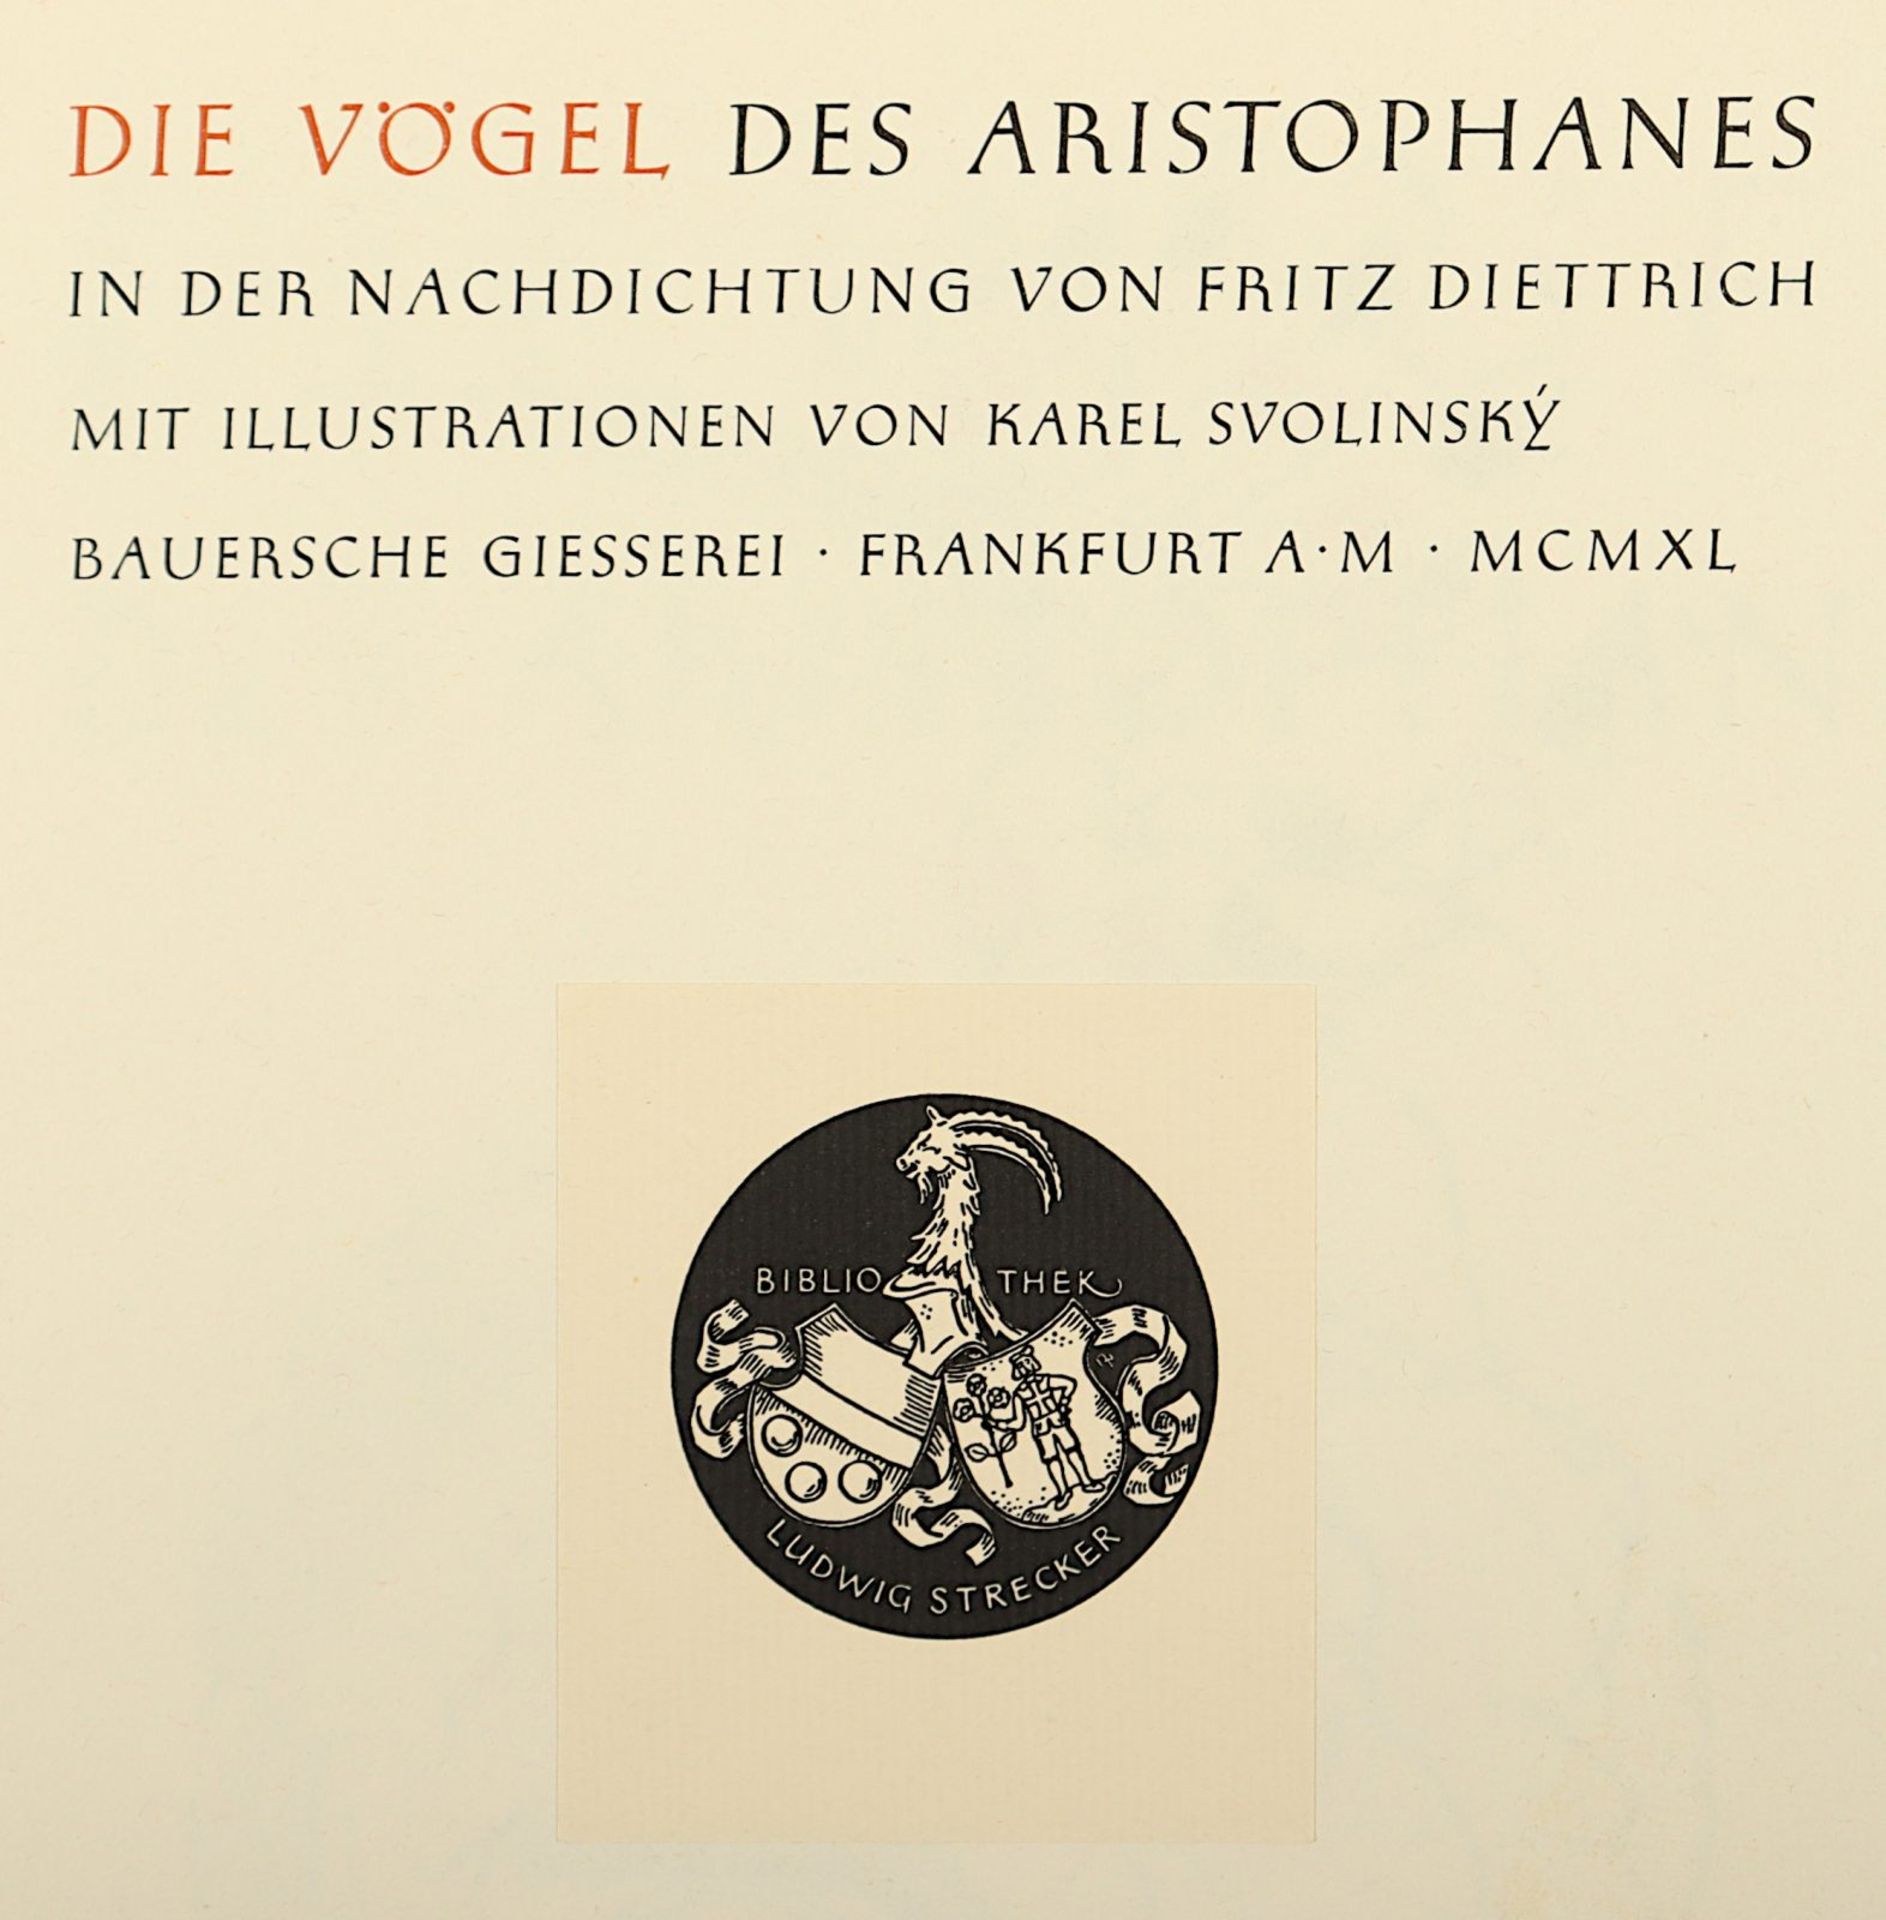 Die Vögel des Aristophanes, 1940 - Image 3 of 4